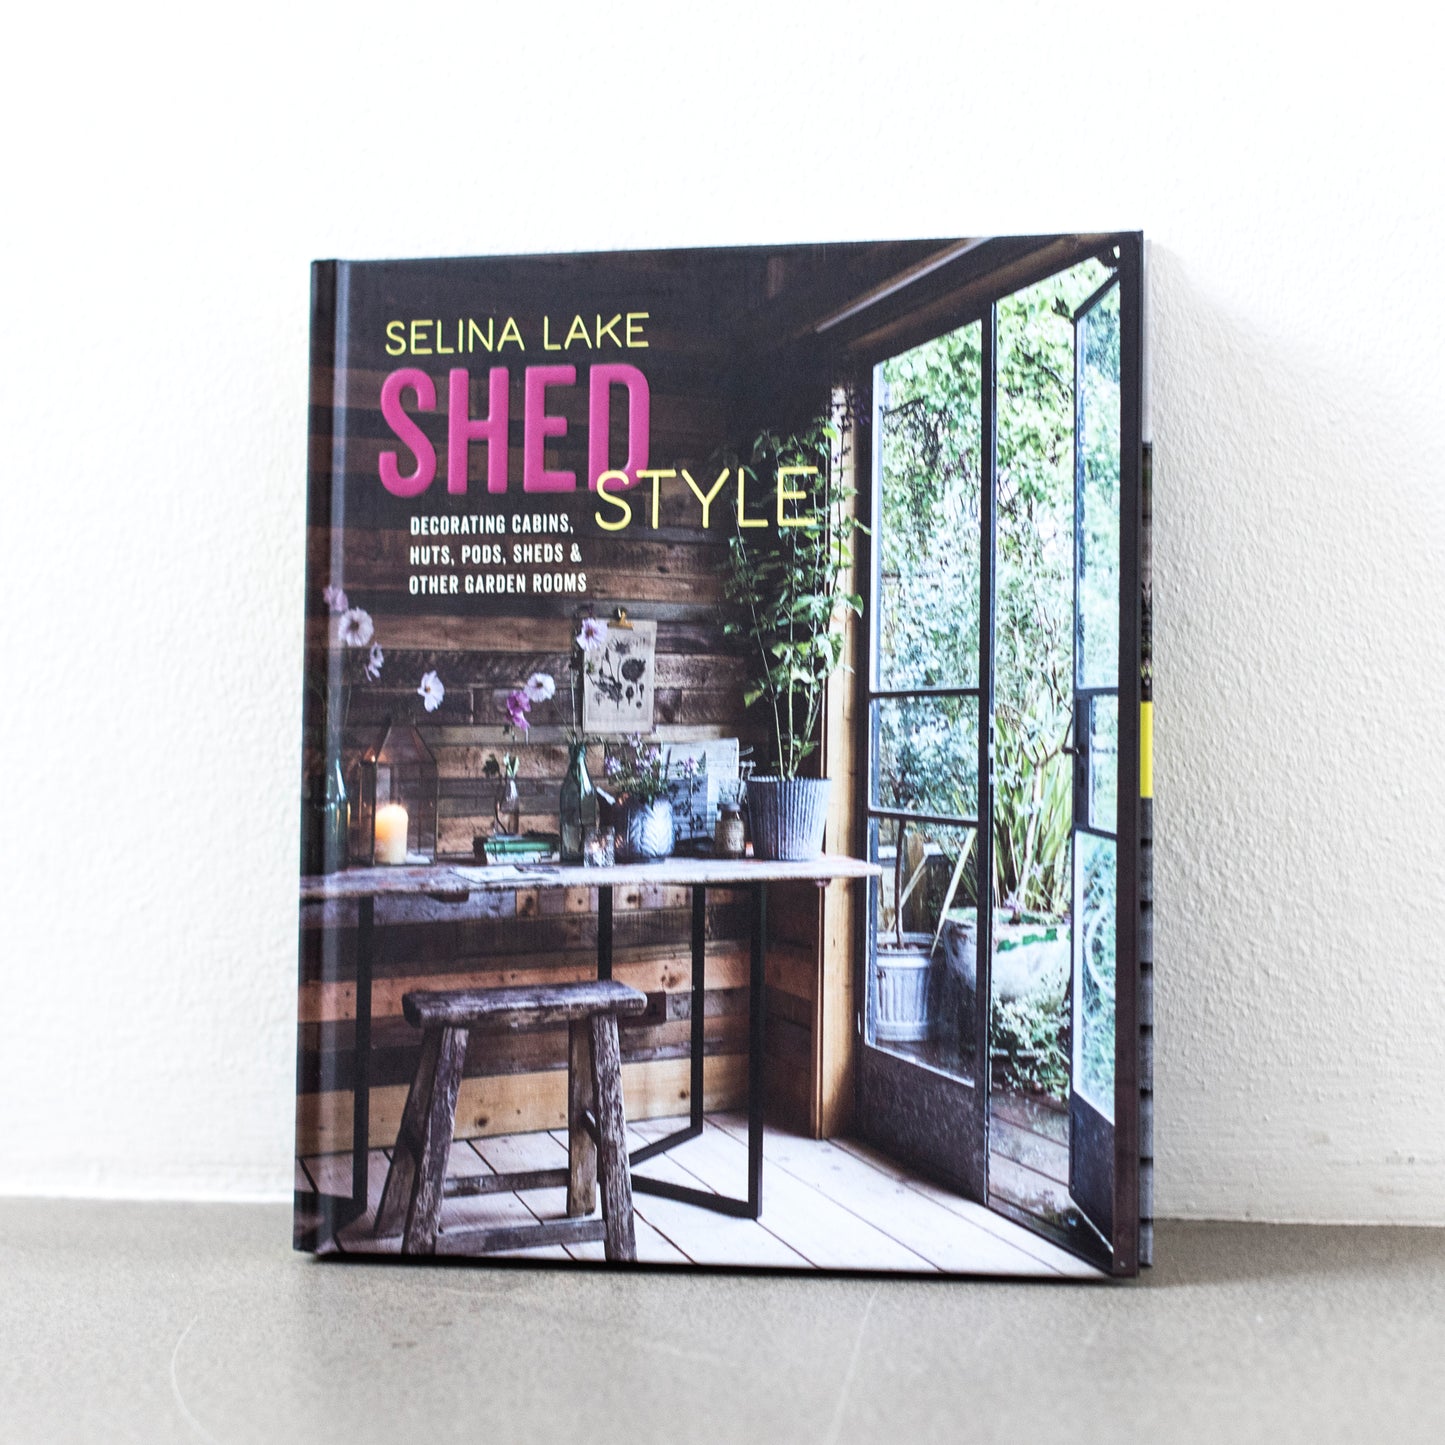 Shed Style - Selina Lake